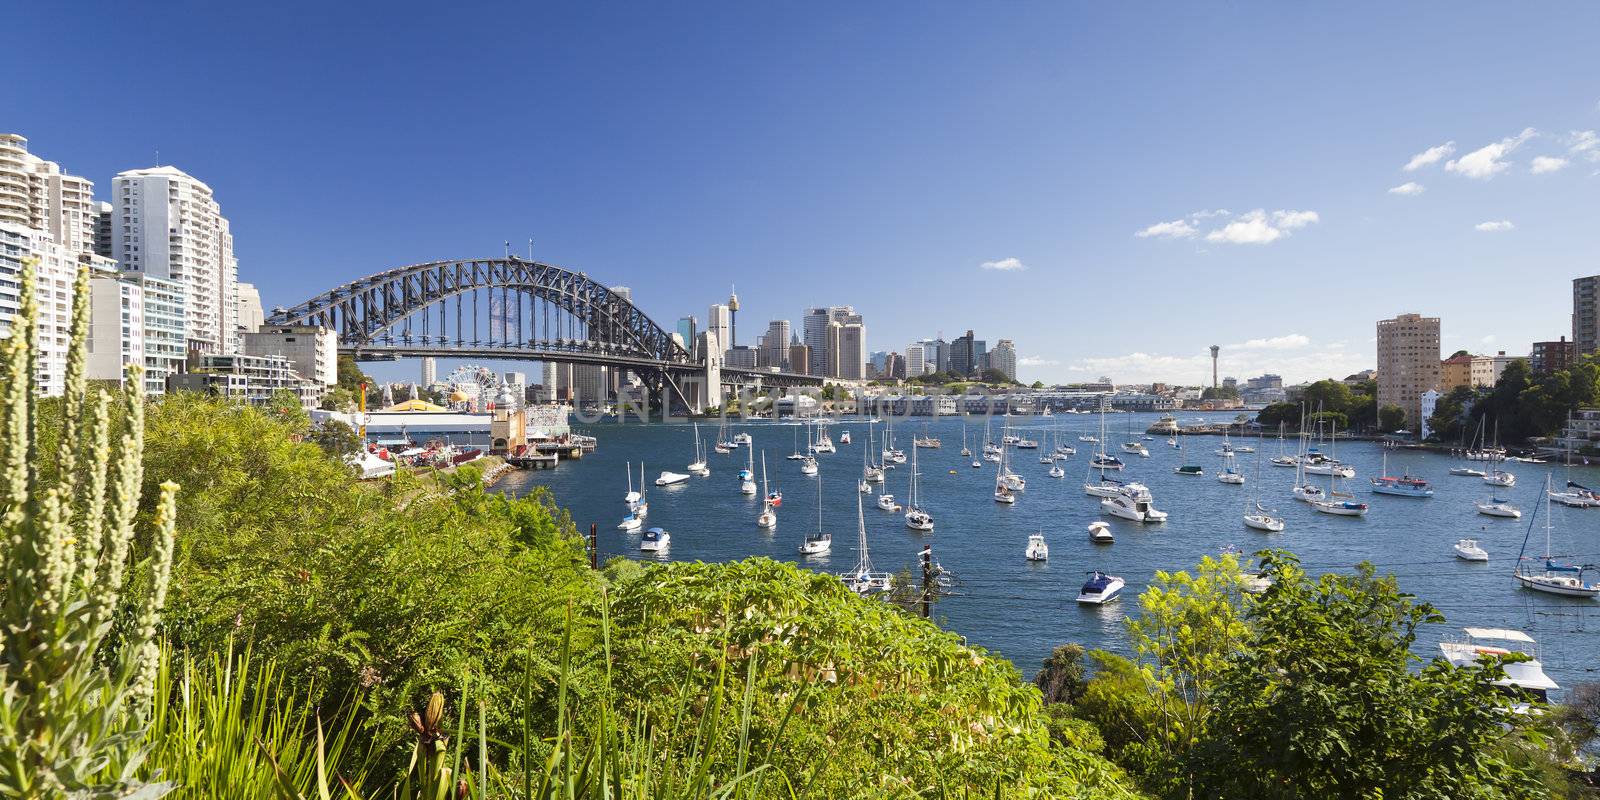 An image of harbour bridge in Sydney